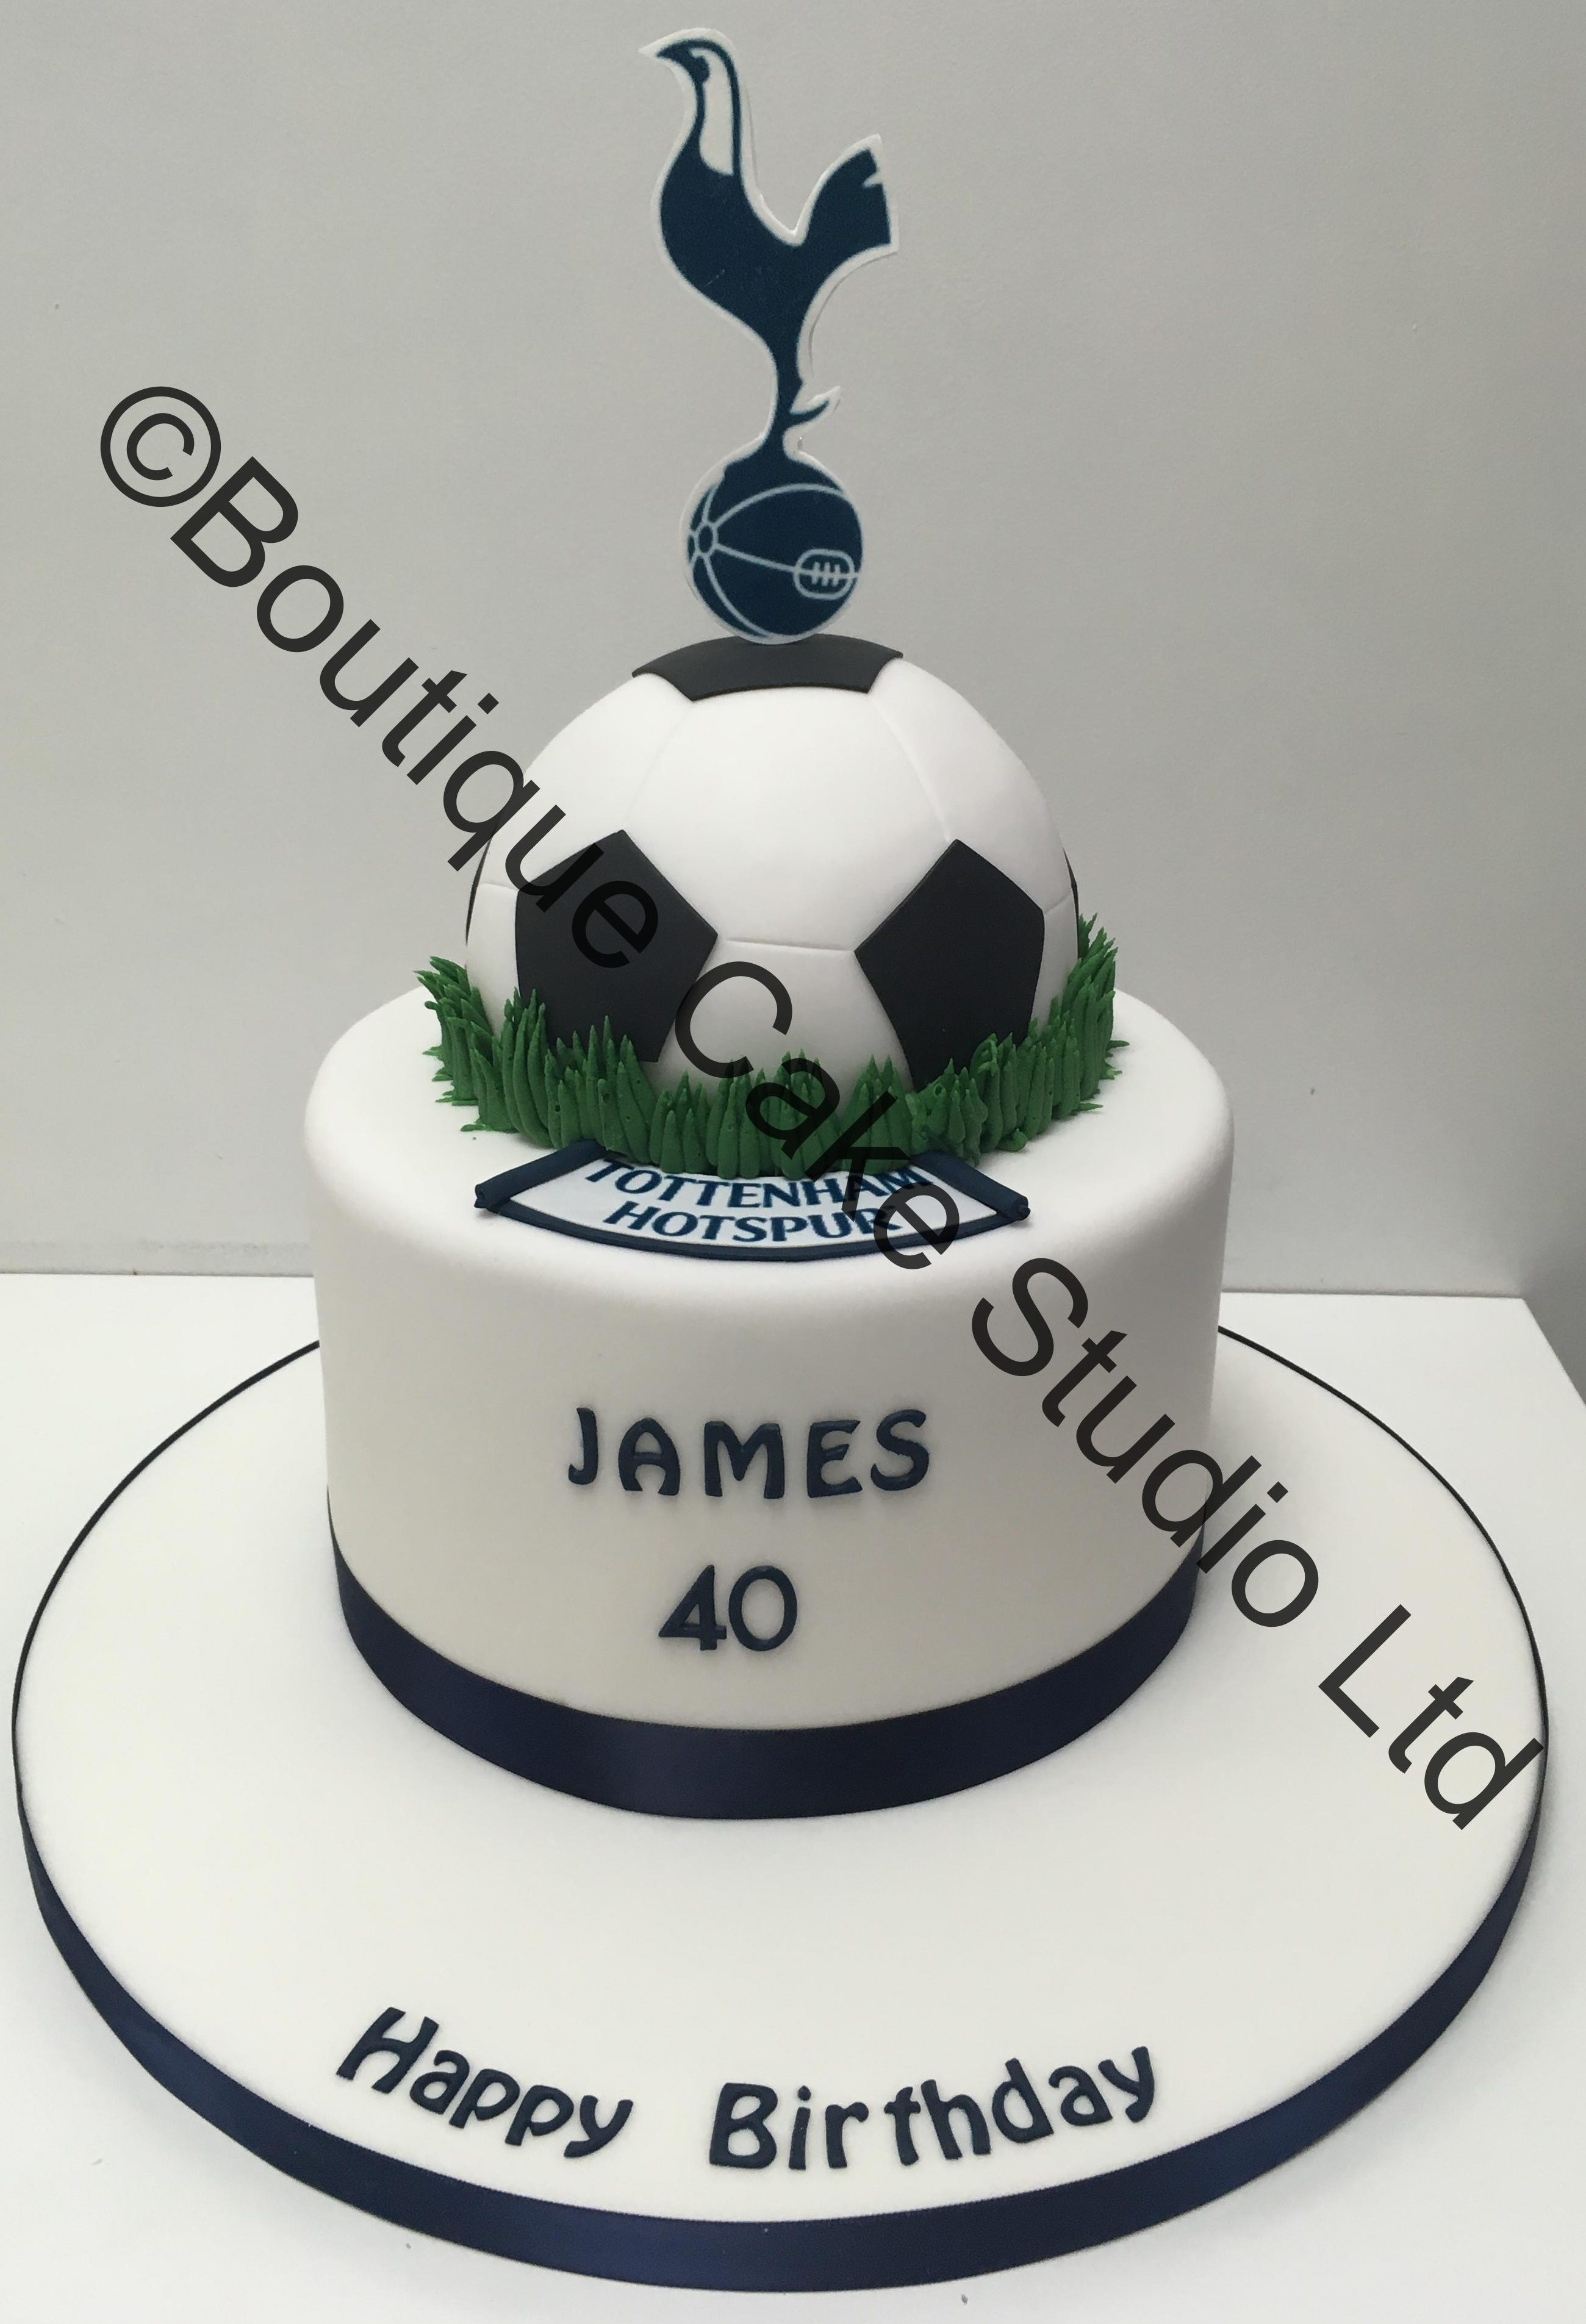 Tottenham themed cake with half ball